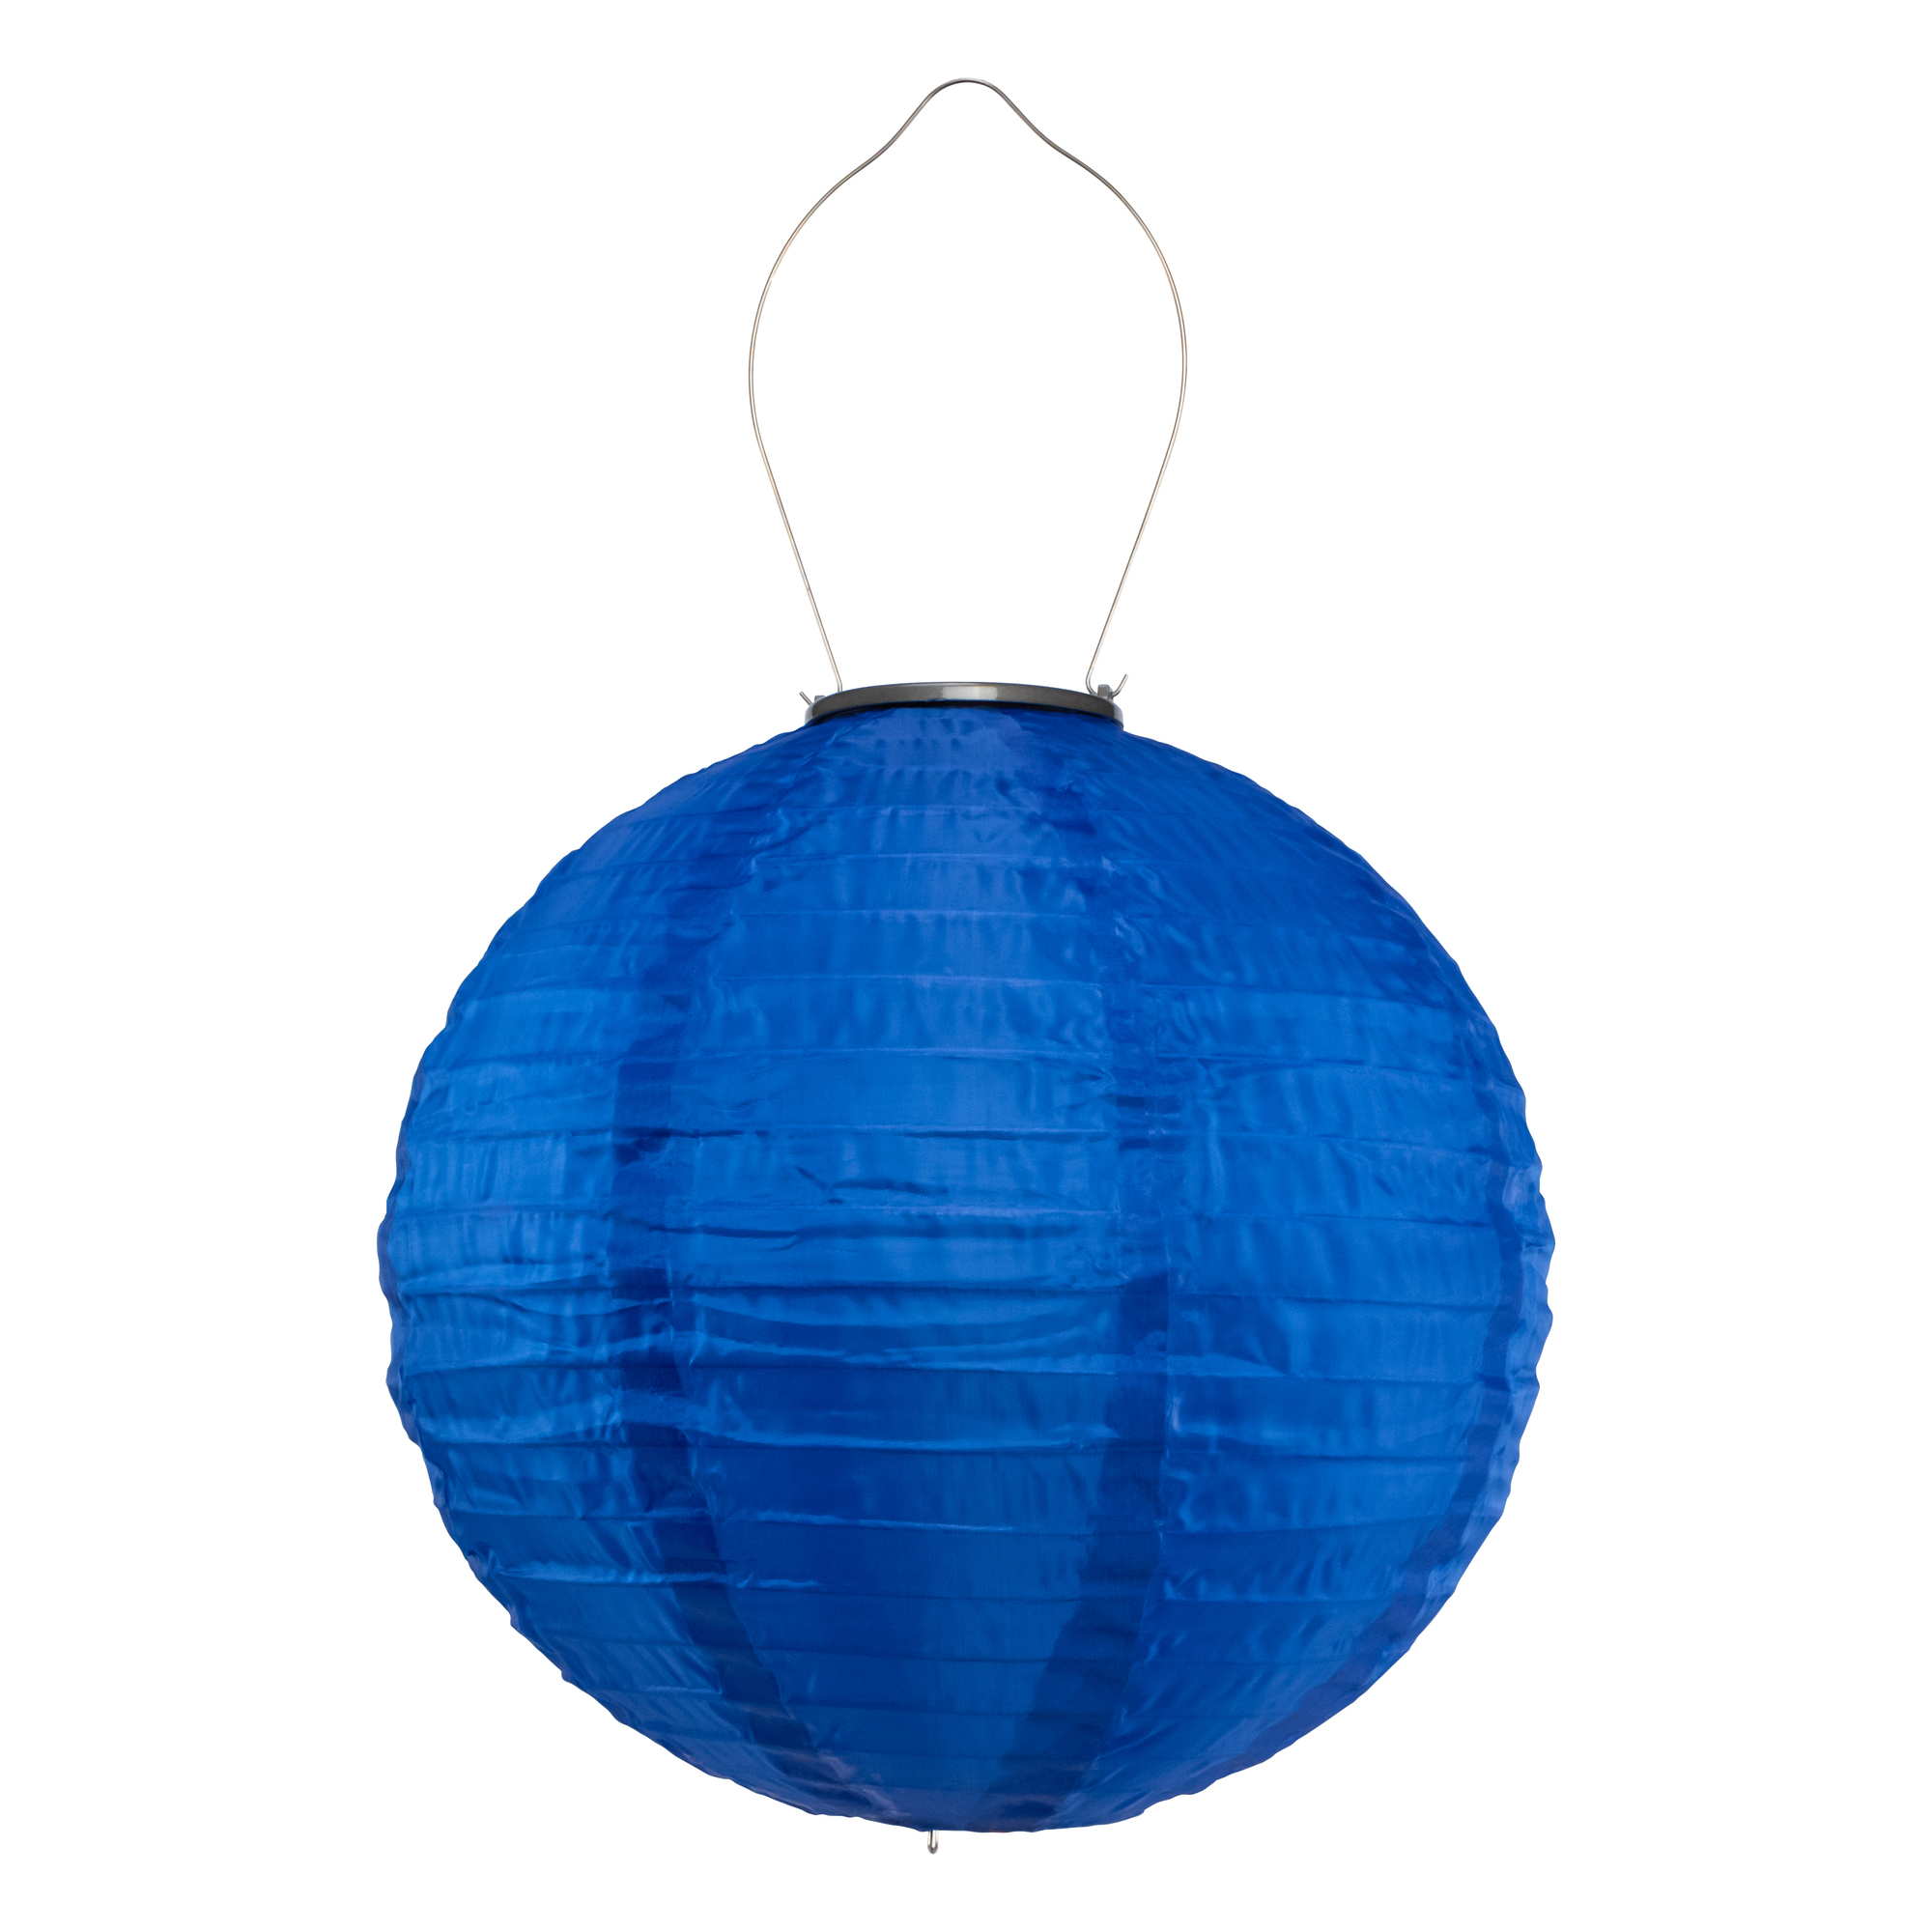 Allsop Home and Garden, Soji Original 12Inch Solar Lantern - Cerulean Blue, Color Blue, Included (qty.) 1 Model 32476